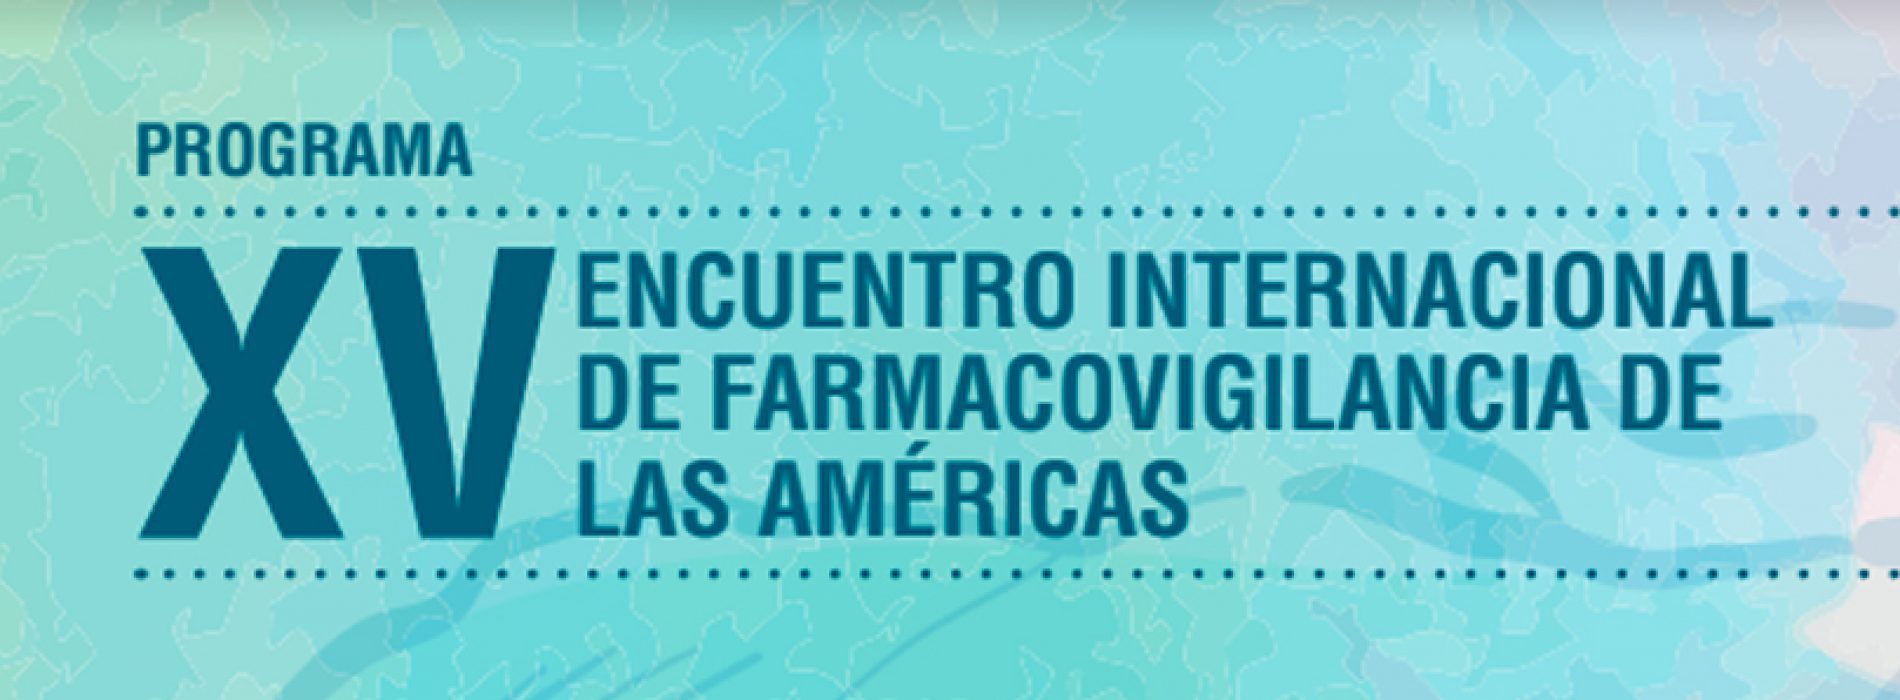 Reminder "Fifteenth meeting of pharmacovigilance of las Americas International"